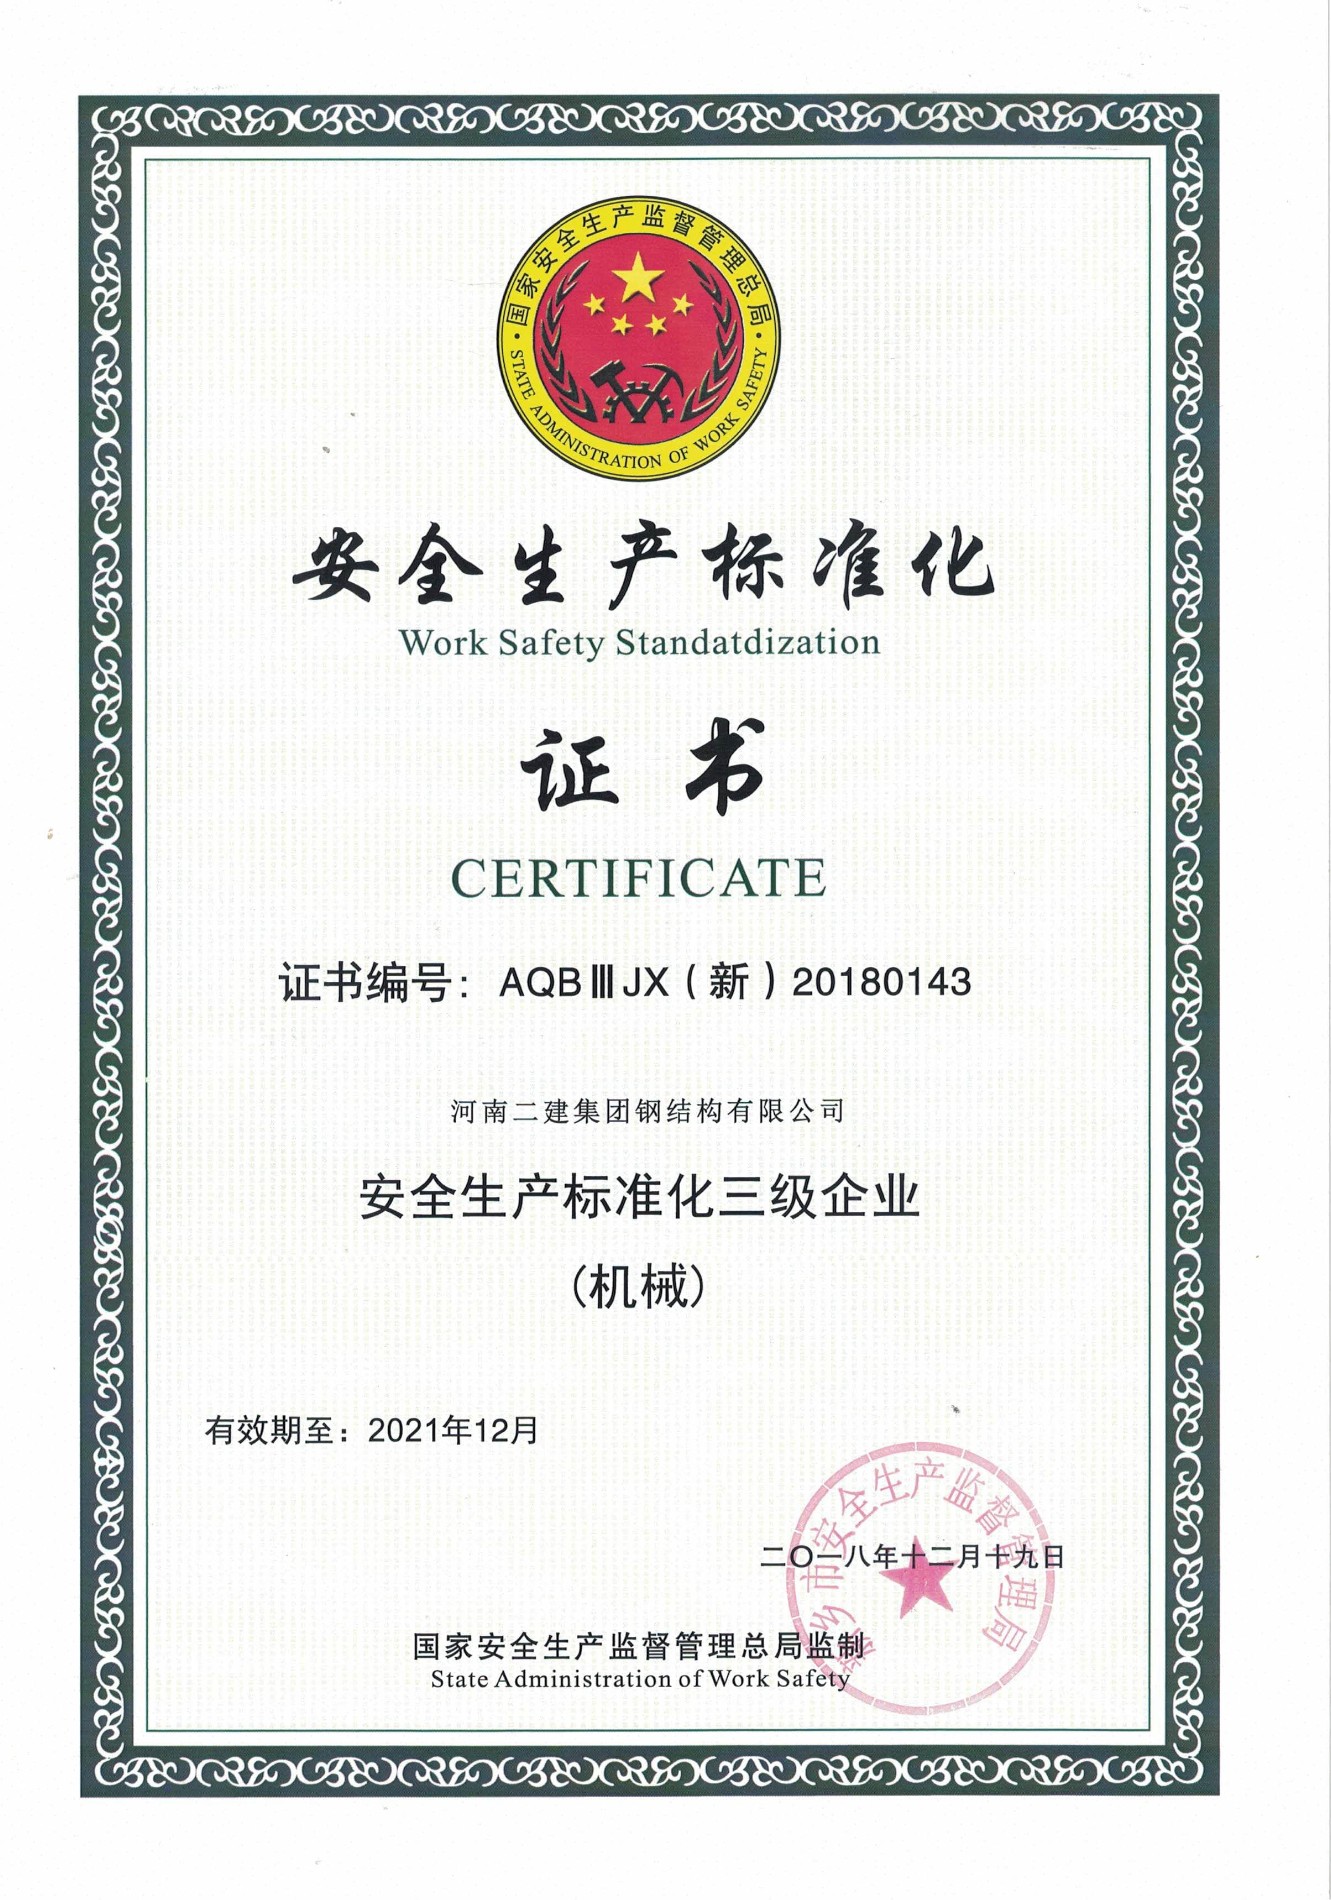 Сертификат предприятия уровня безопасности производства 3